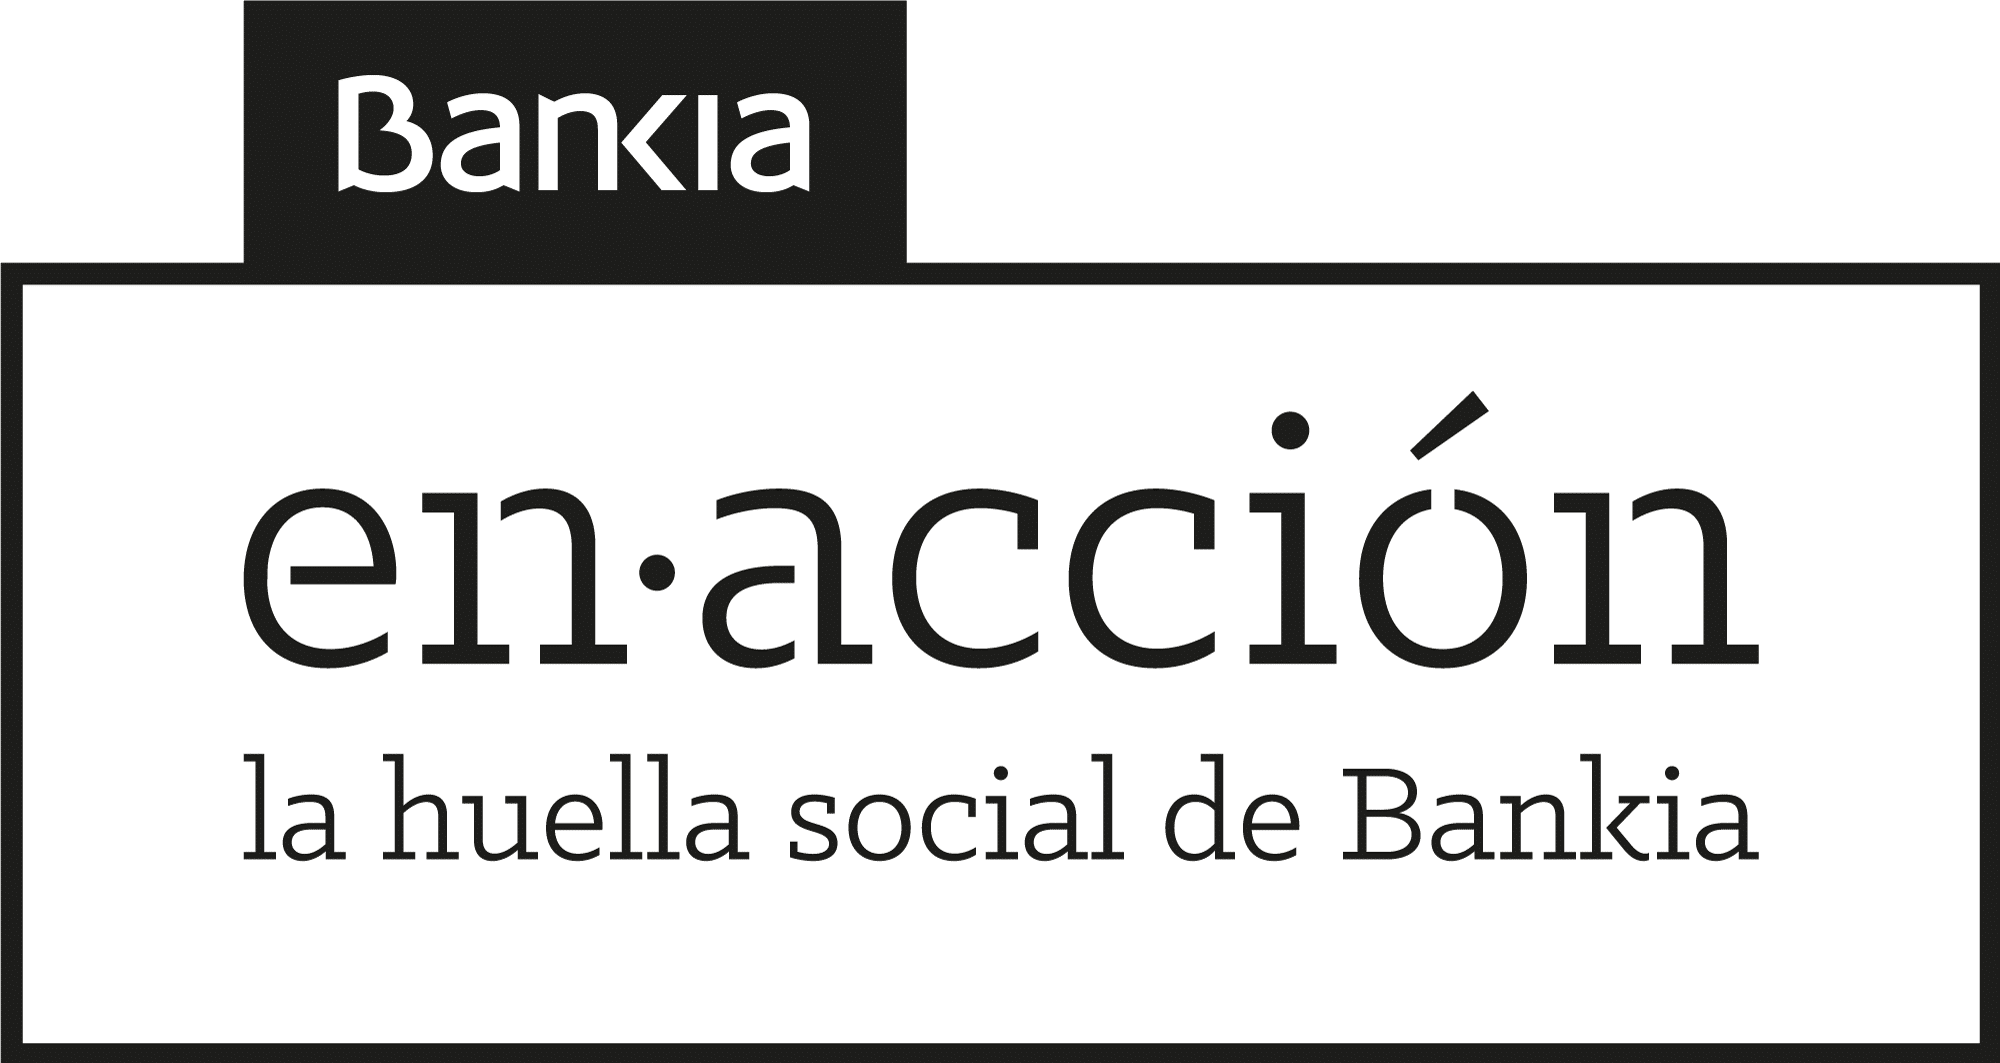 Bankia en acción